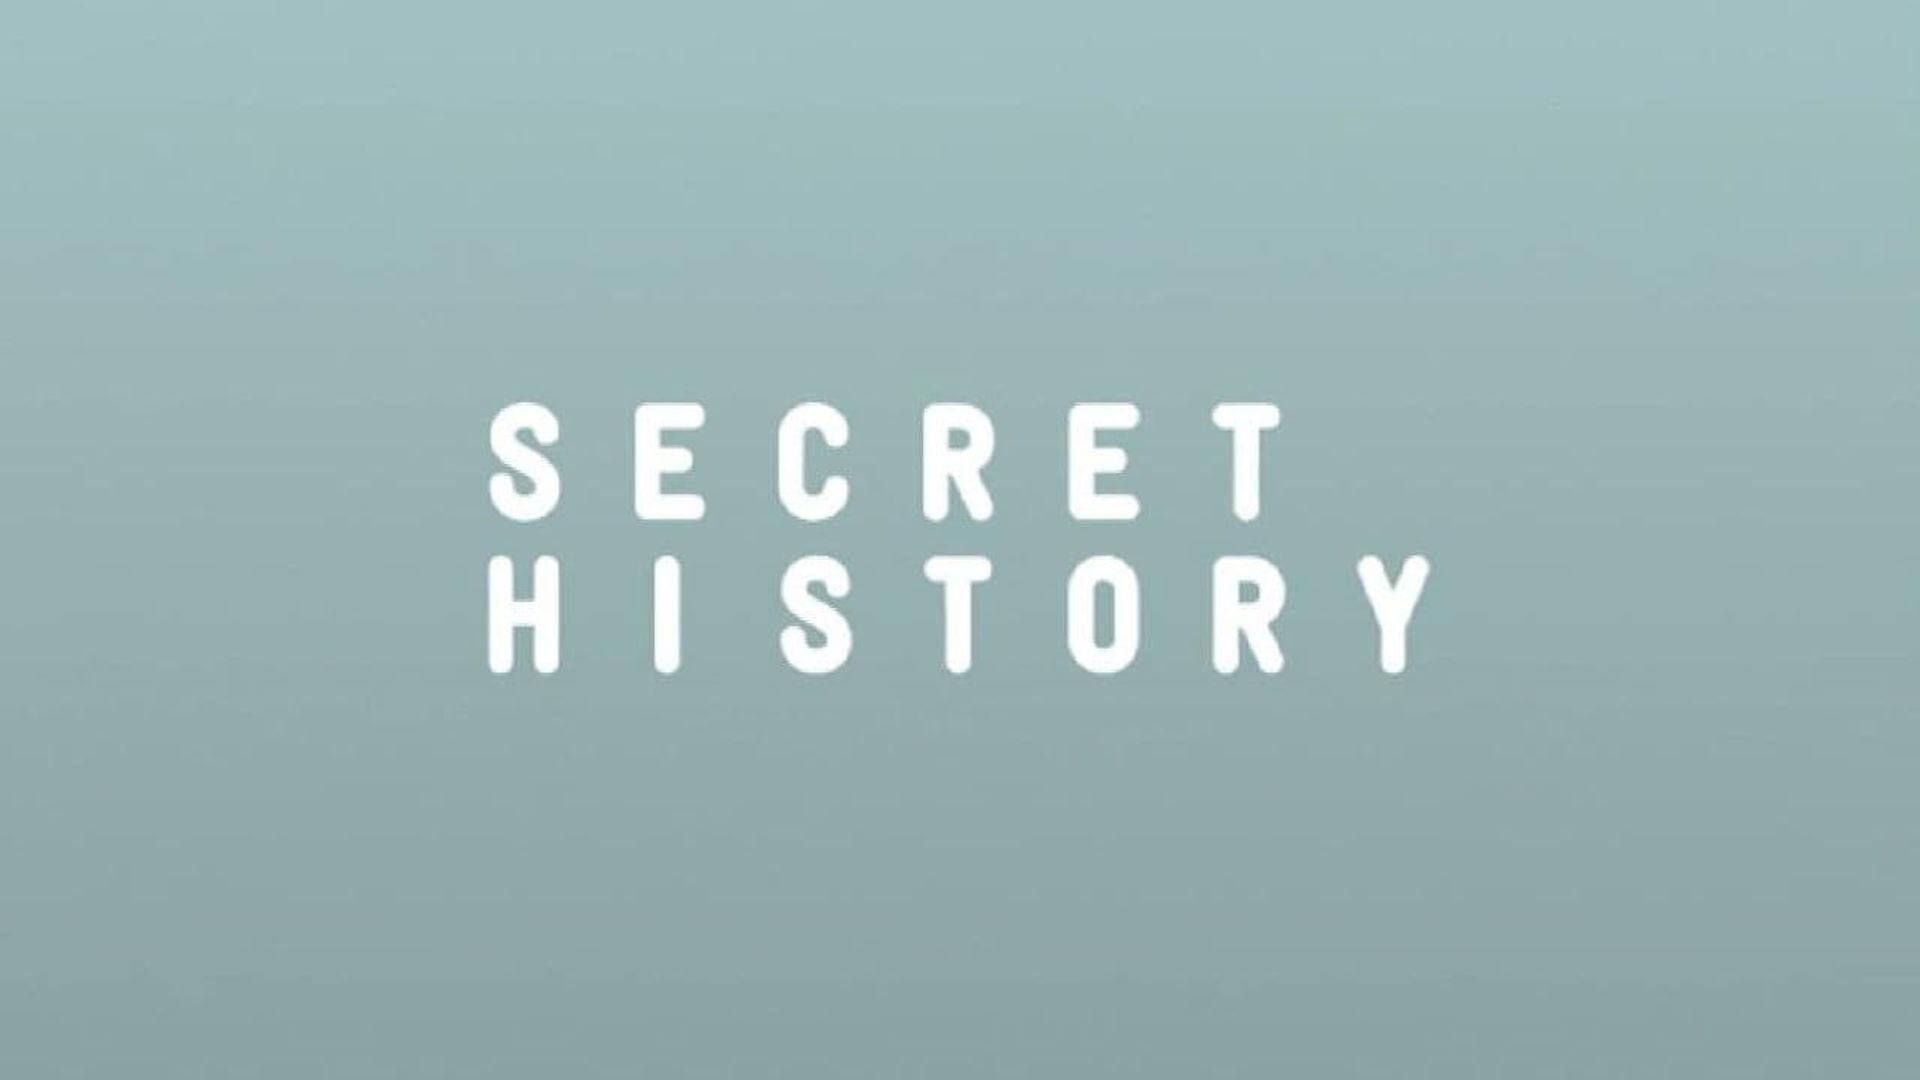 Secret History background